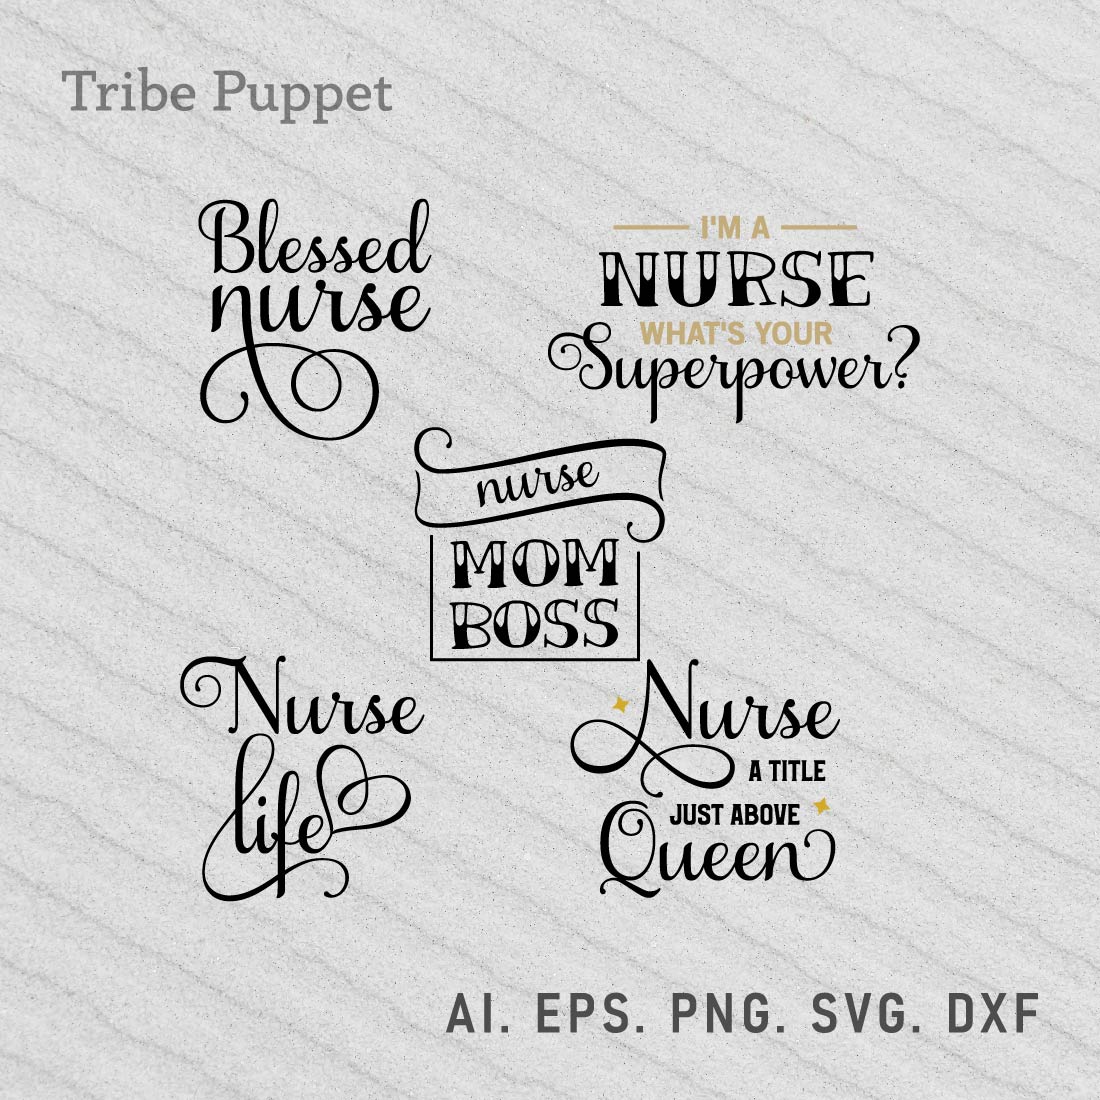 Nurse Typography preview image.